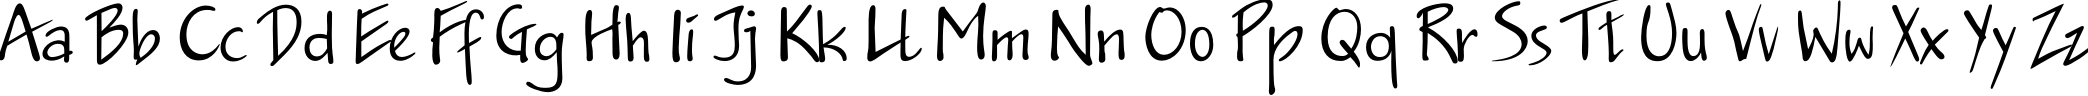 Пример написания английского алфавита шрифтом JakobC